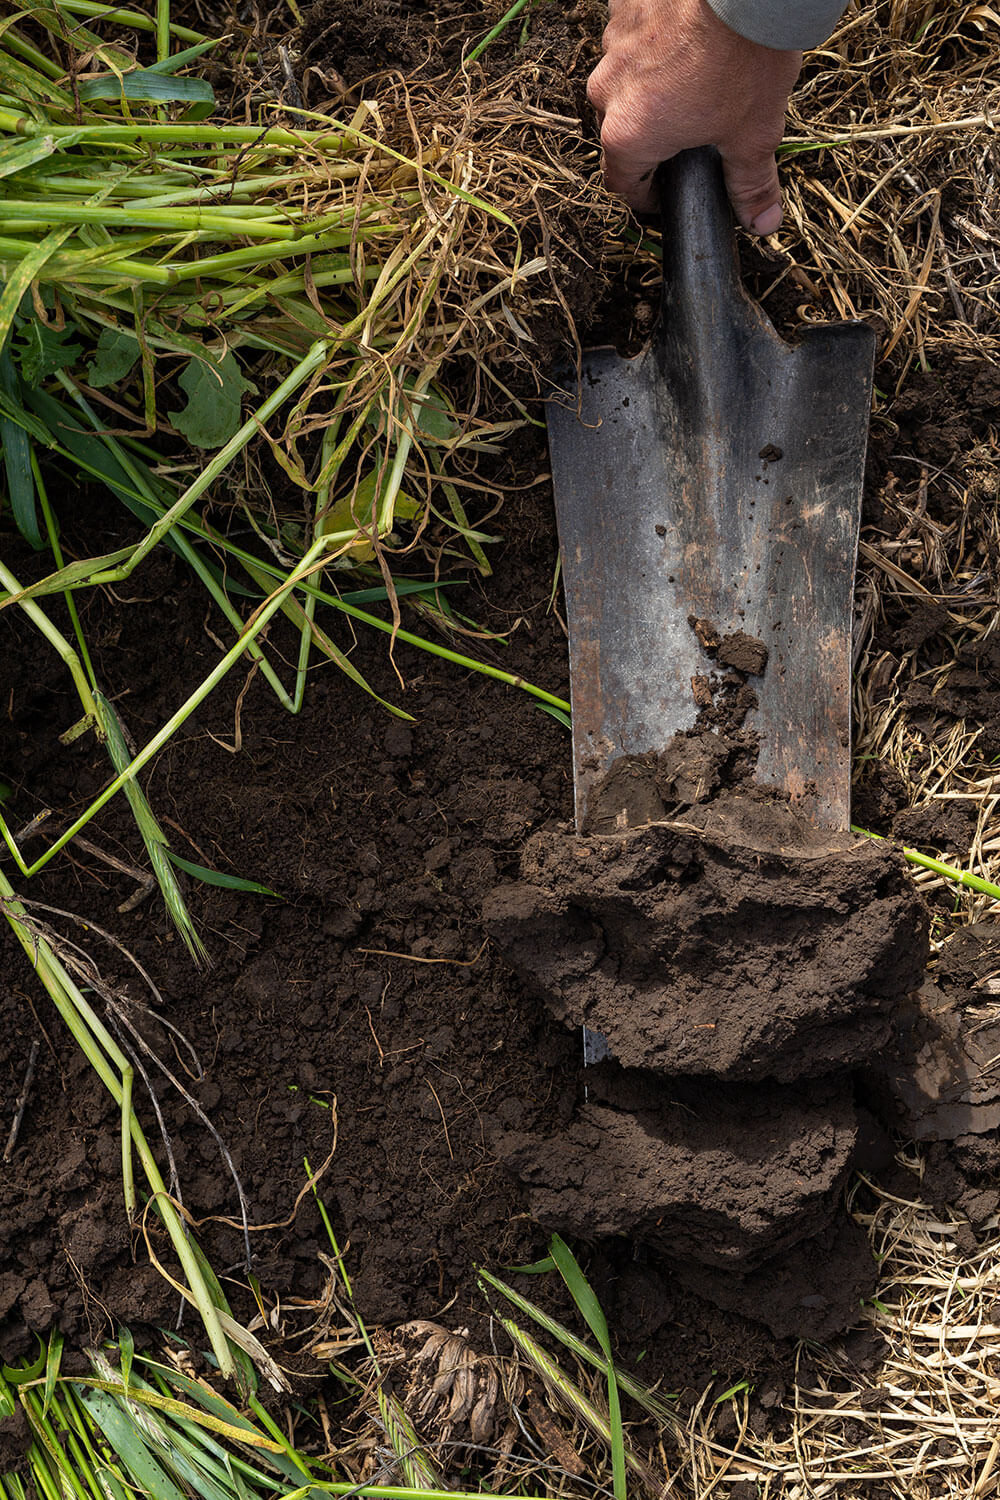 Shovel digs into the soil